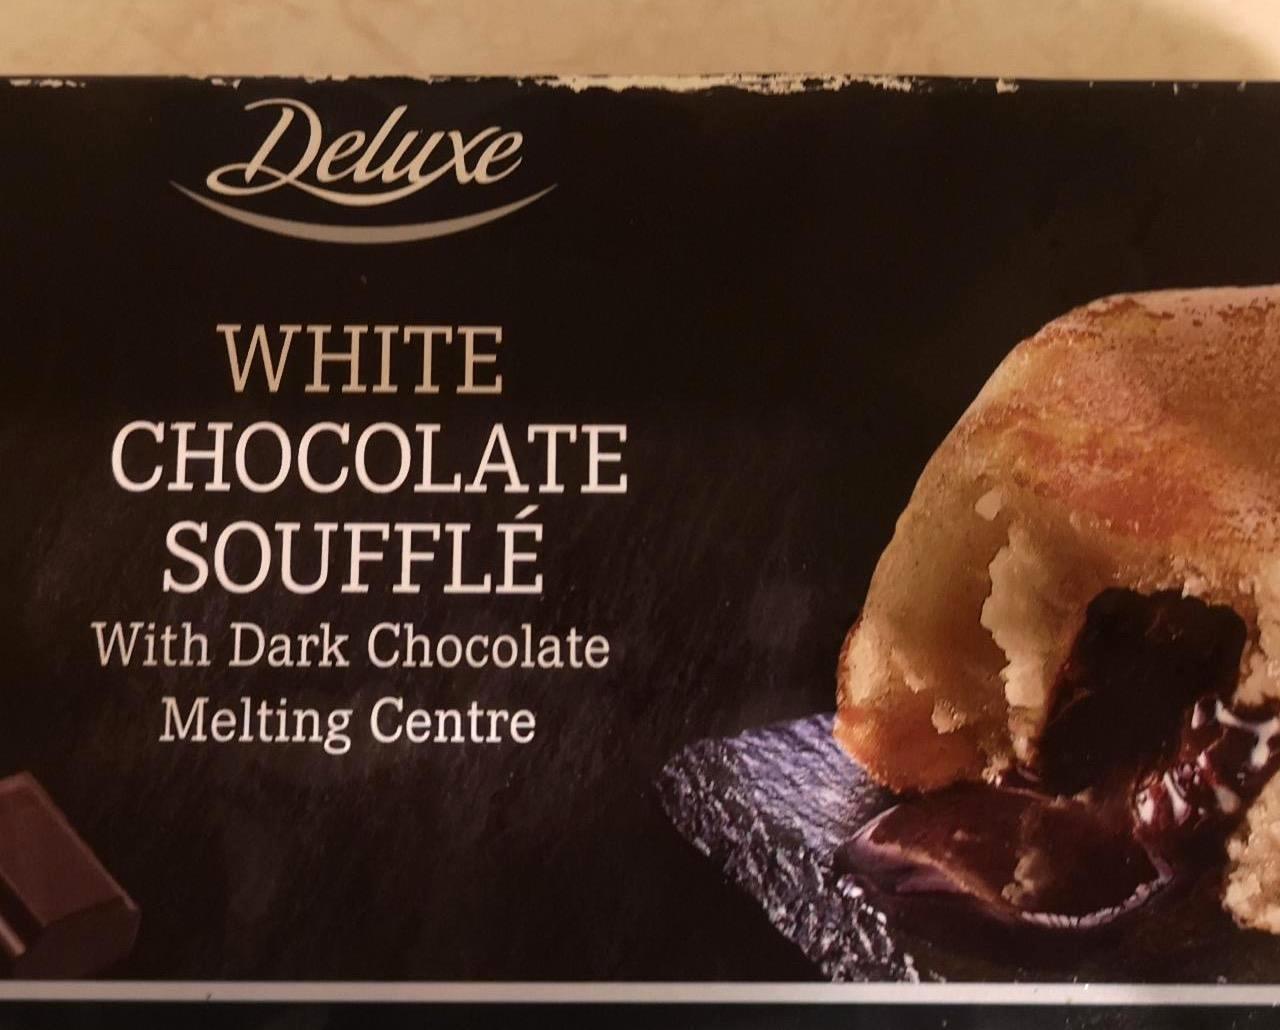 Képek - White chocolate soufflé Deluxe